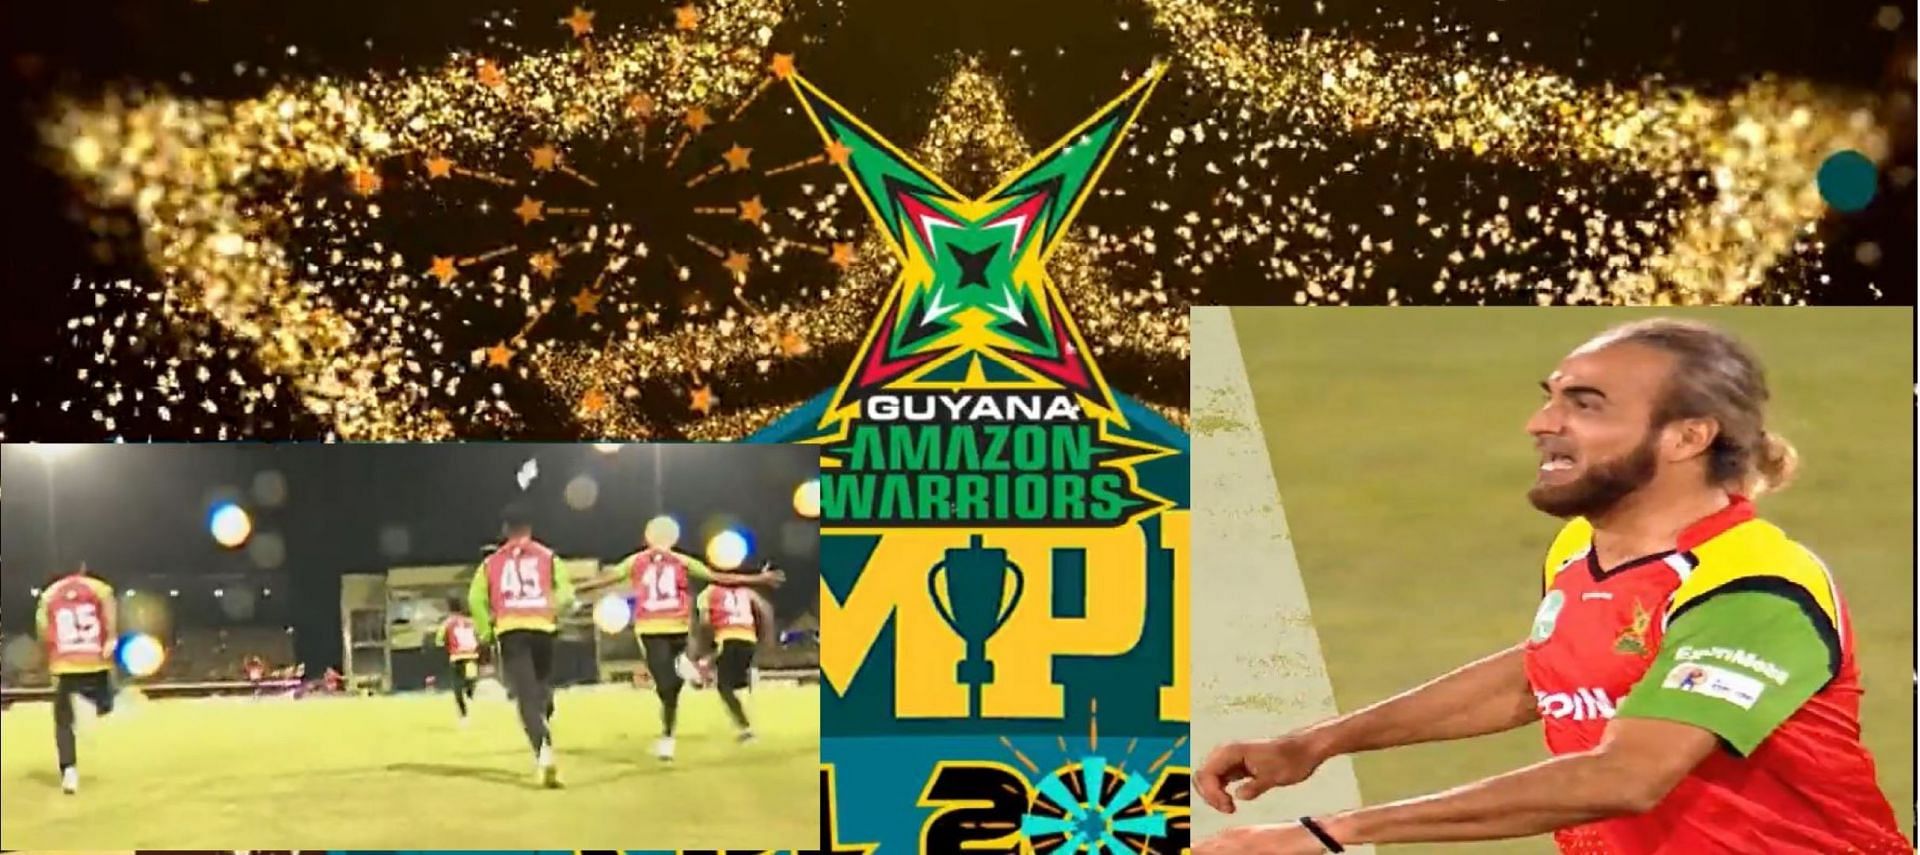 Guyana  Warriors: CPL 2022 team guide